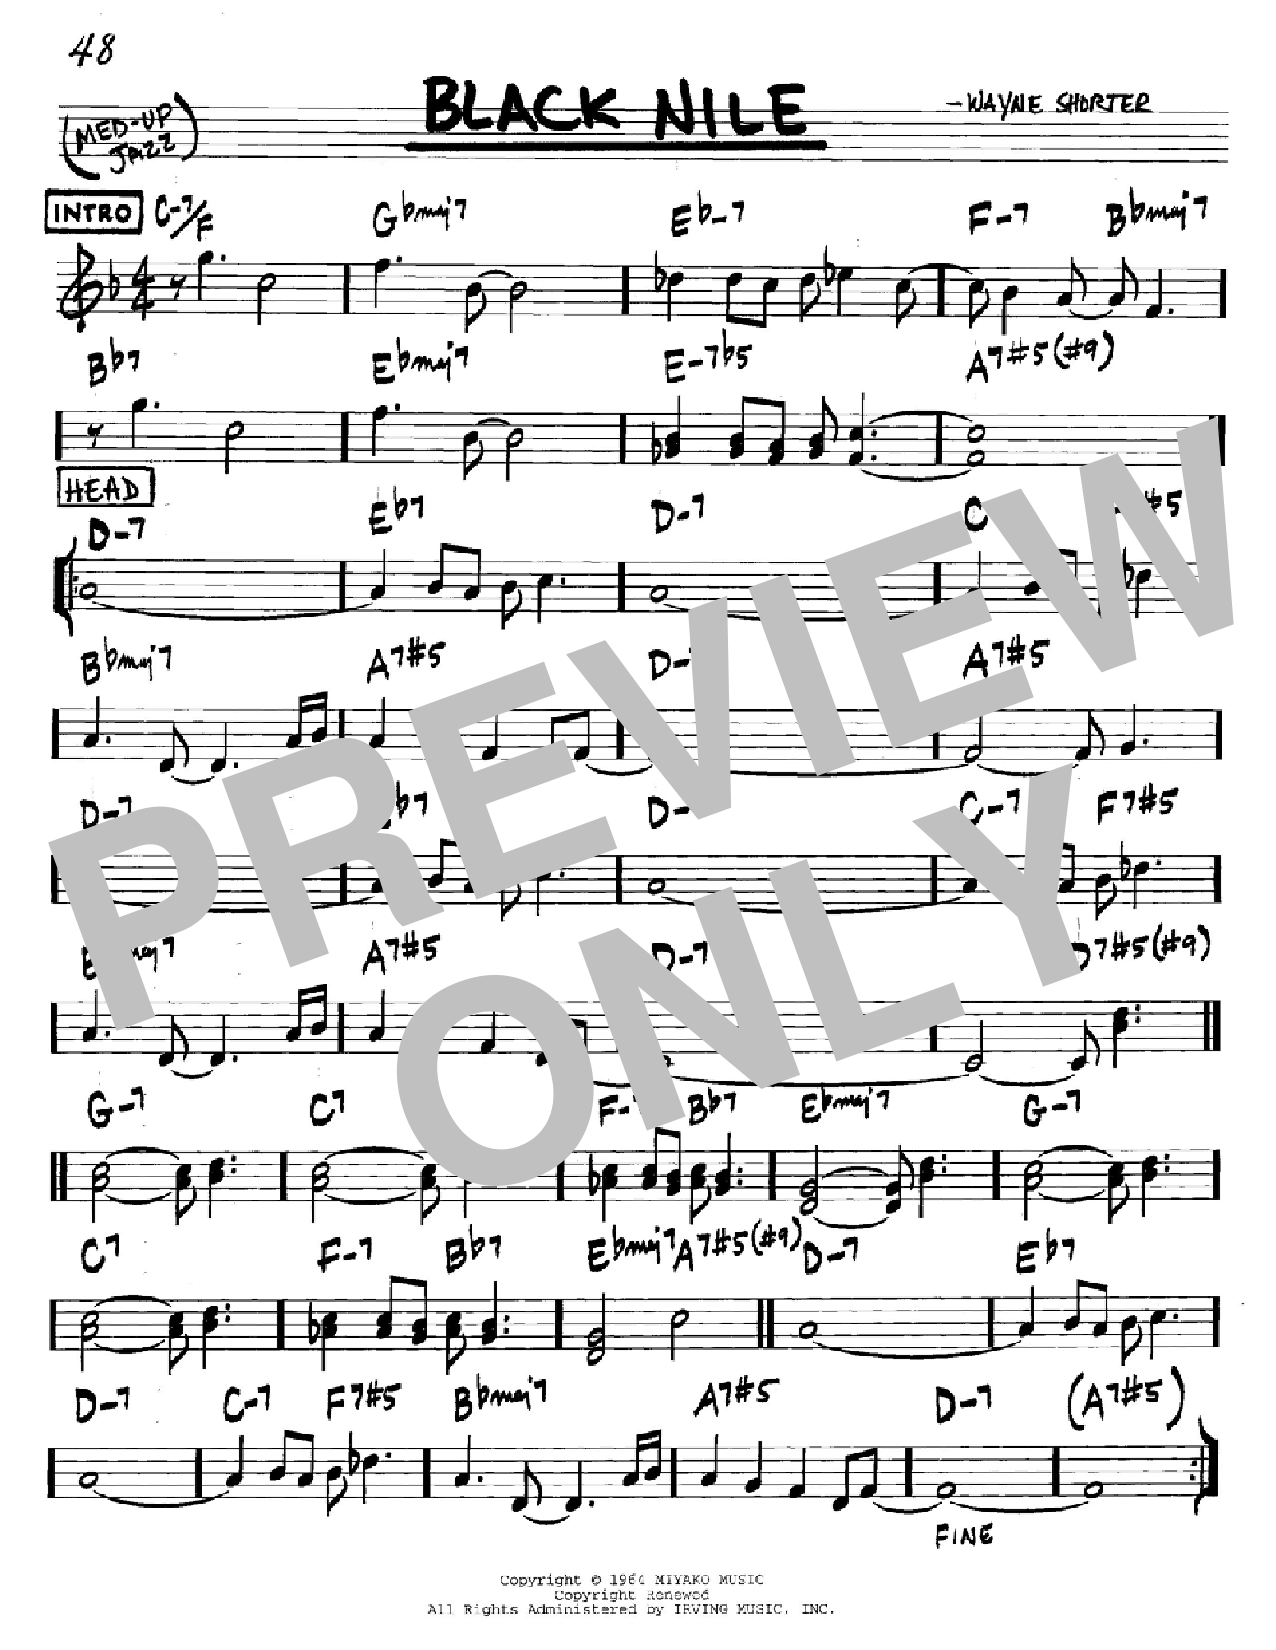 Wayne Shorter Black Nile Sheet Music Notes & Chords for Real Book - Melody & Chords - Bb Instruments - Download or Print PDF